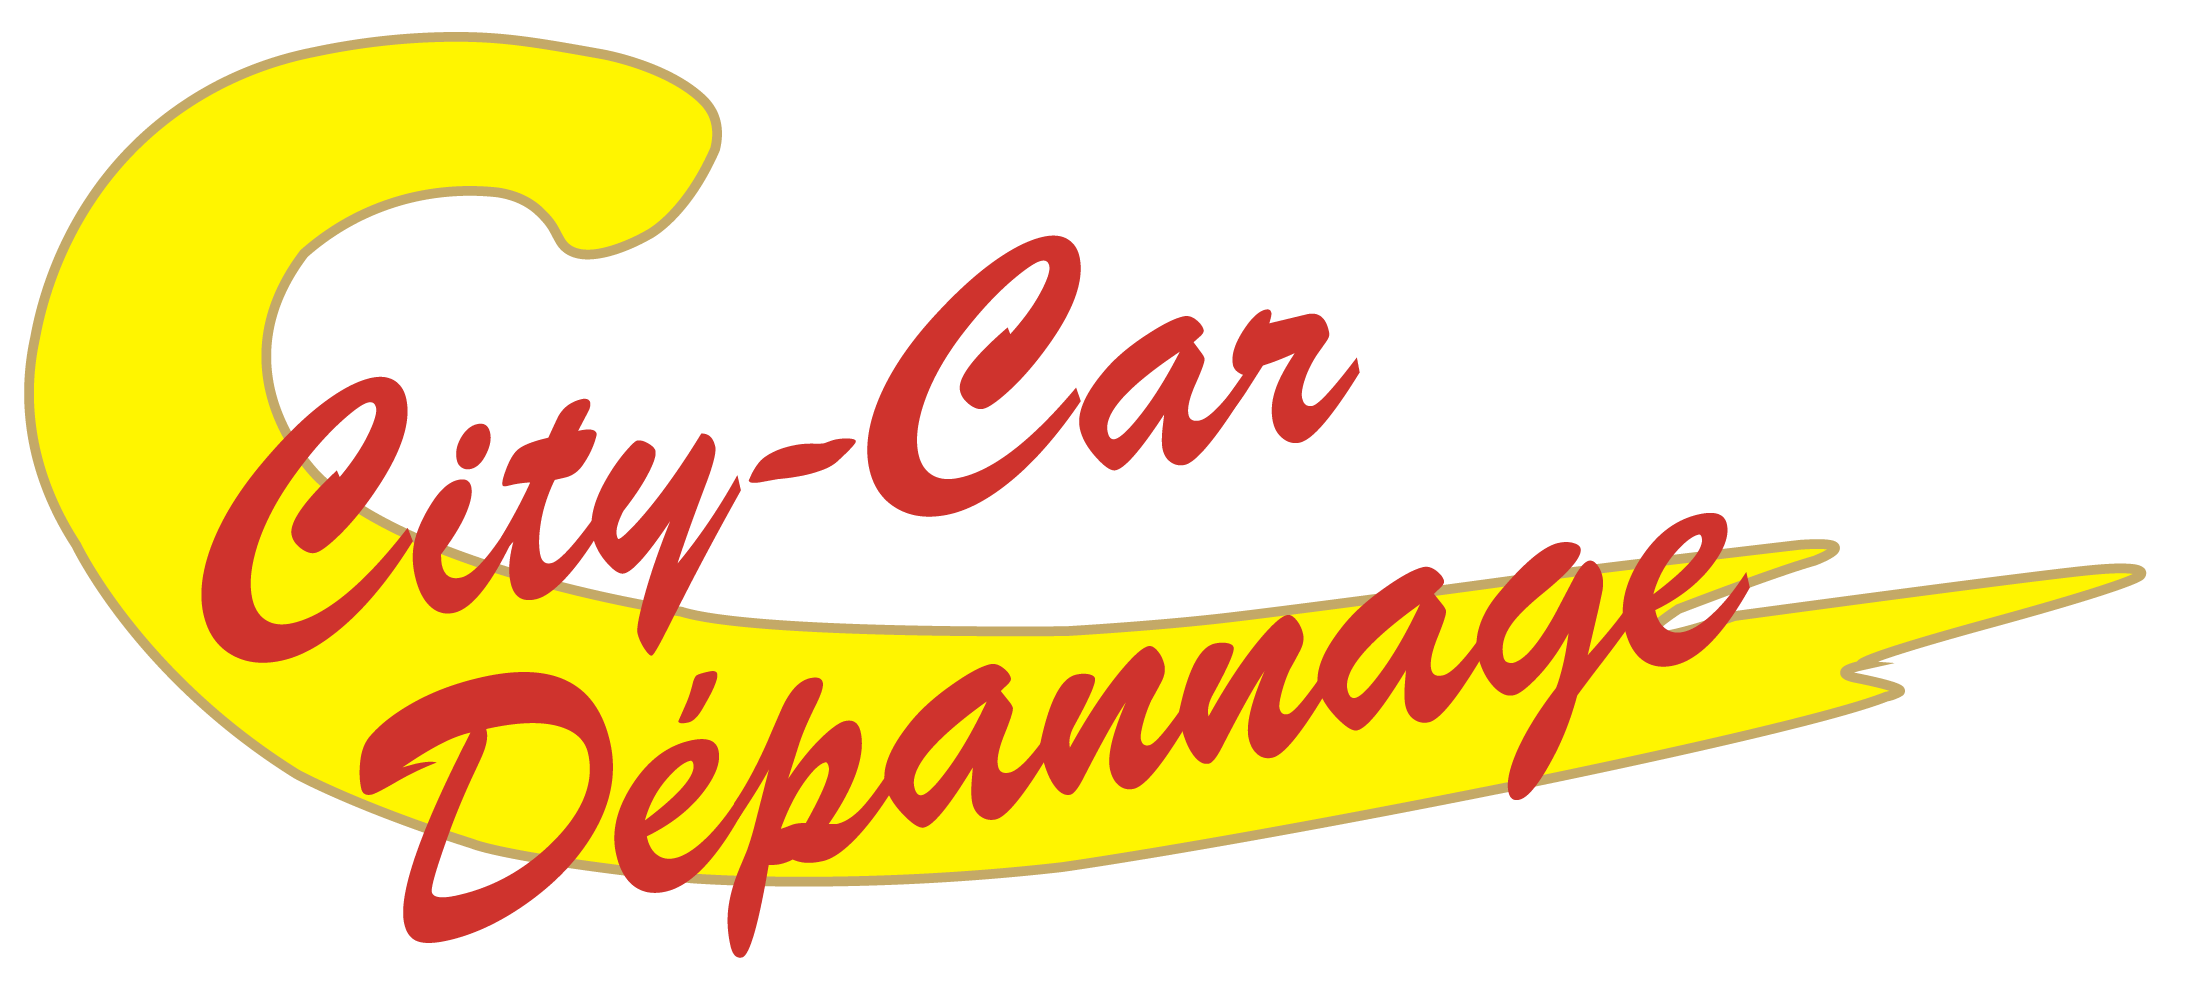 logo-CITY CAR DEPANNAGE